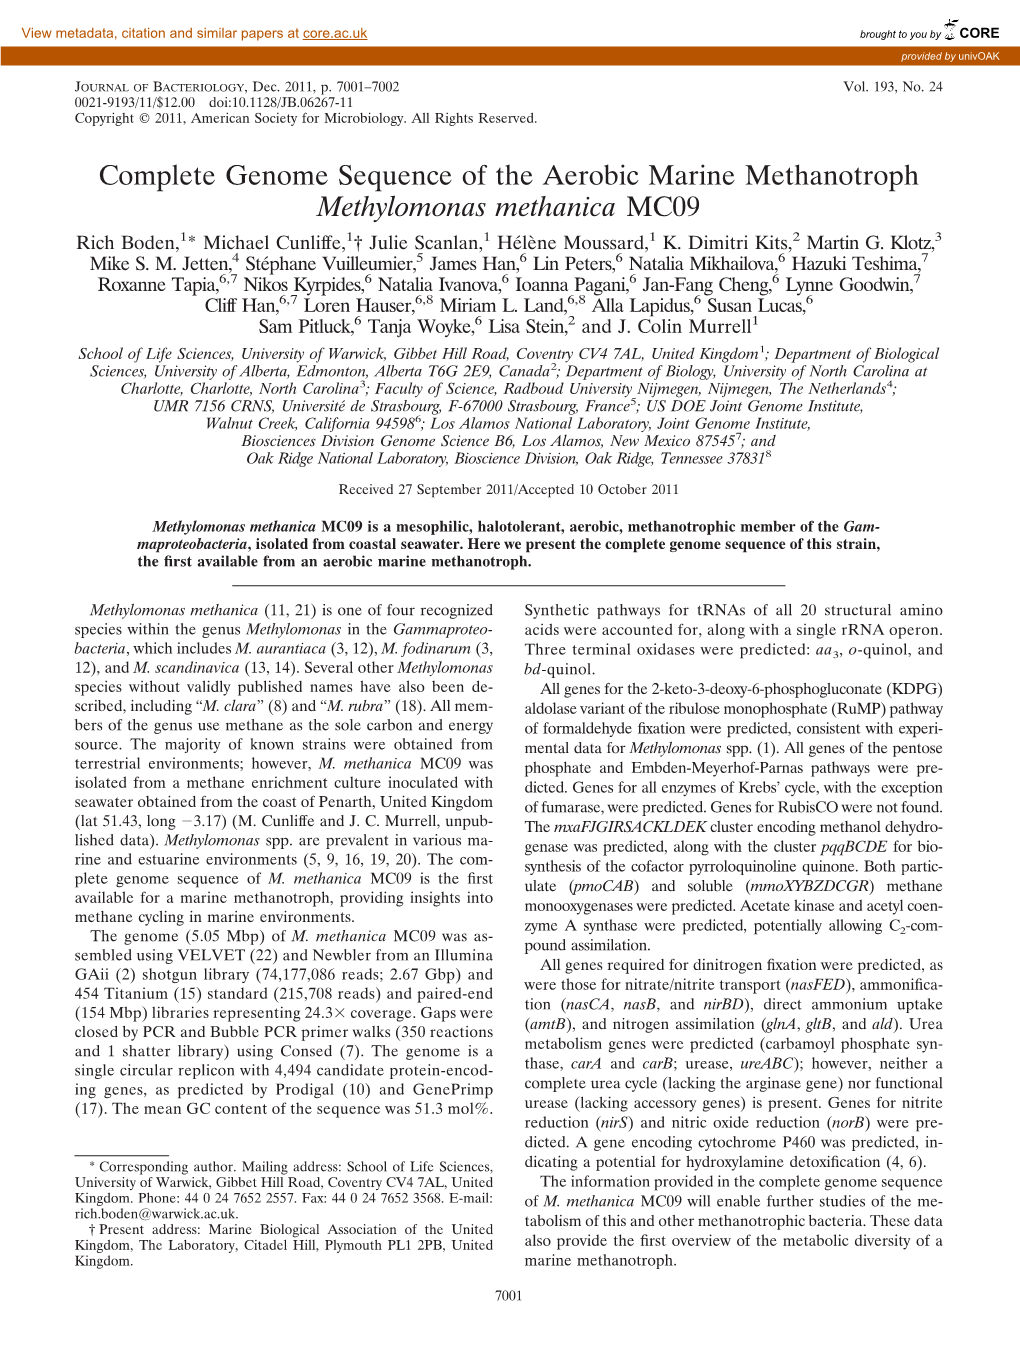 Complete Genome Sequence of the Aerobic Marine Methanotroph Methylomonas Methanica MC09 Rich Boden,1* Michael Cunliffe,1† Julie Scanlan,1 He´Le`Ne Moussard,1 K